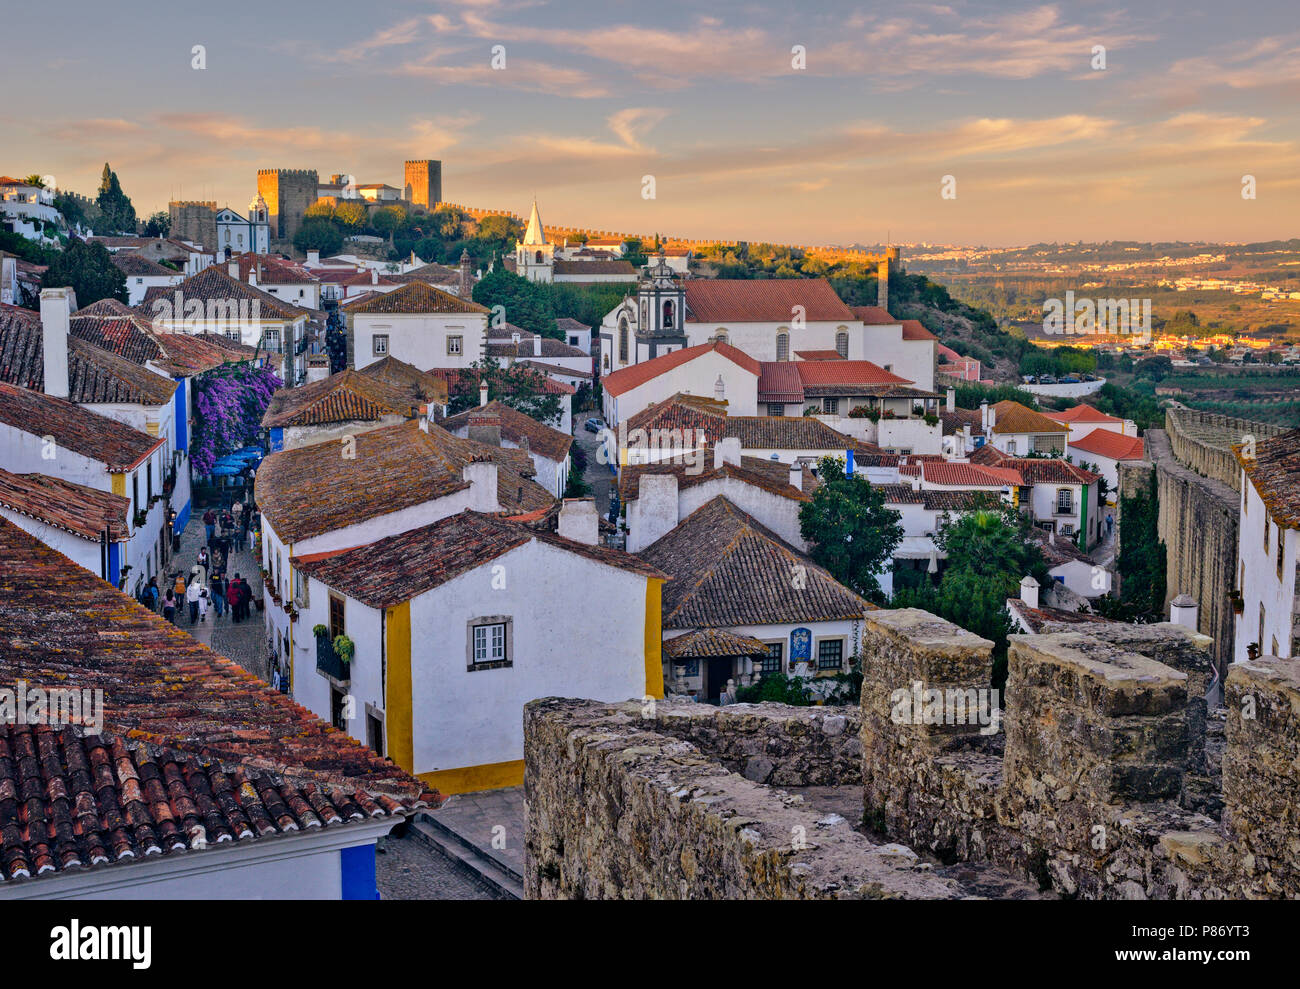 Portugal, Estremadura region, Costa da Prata, Obidos, medieval walled town, evening view of the Pousada, castle and cobbled street Stock Photo